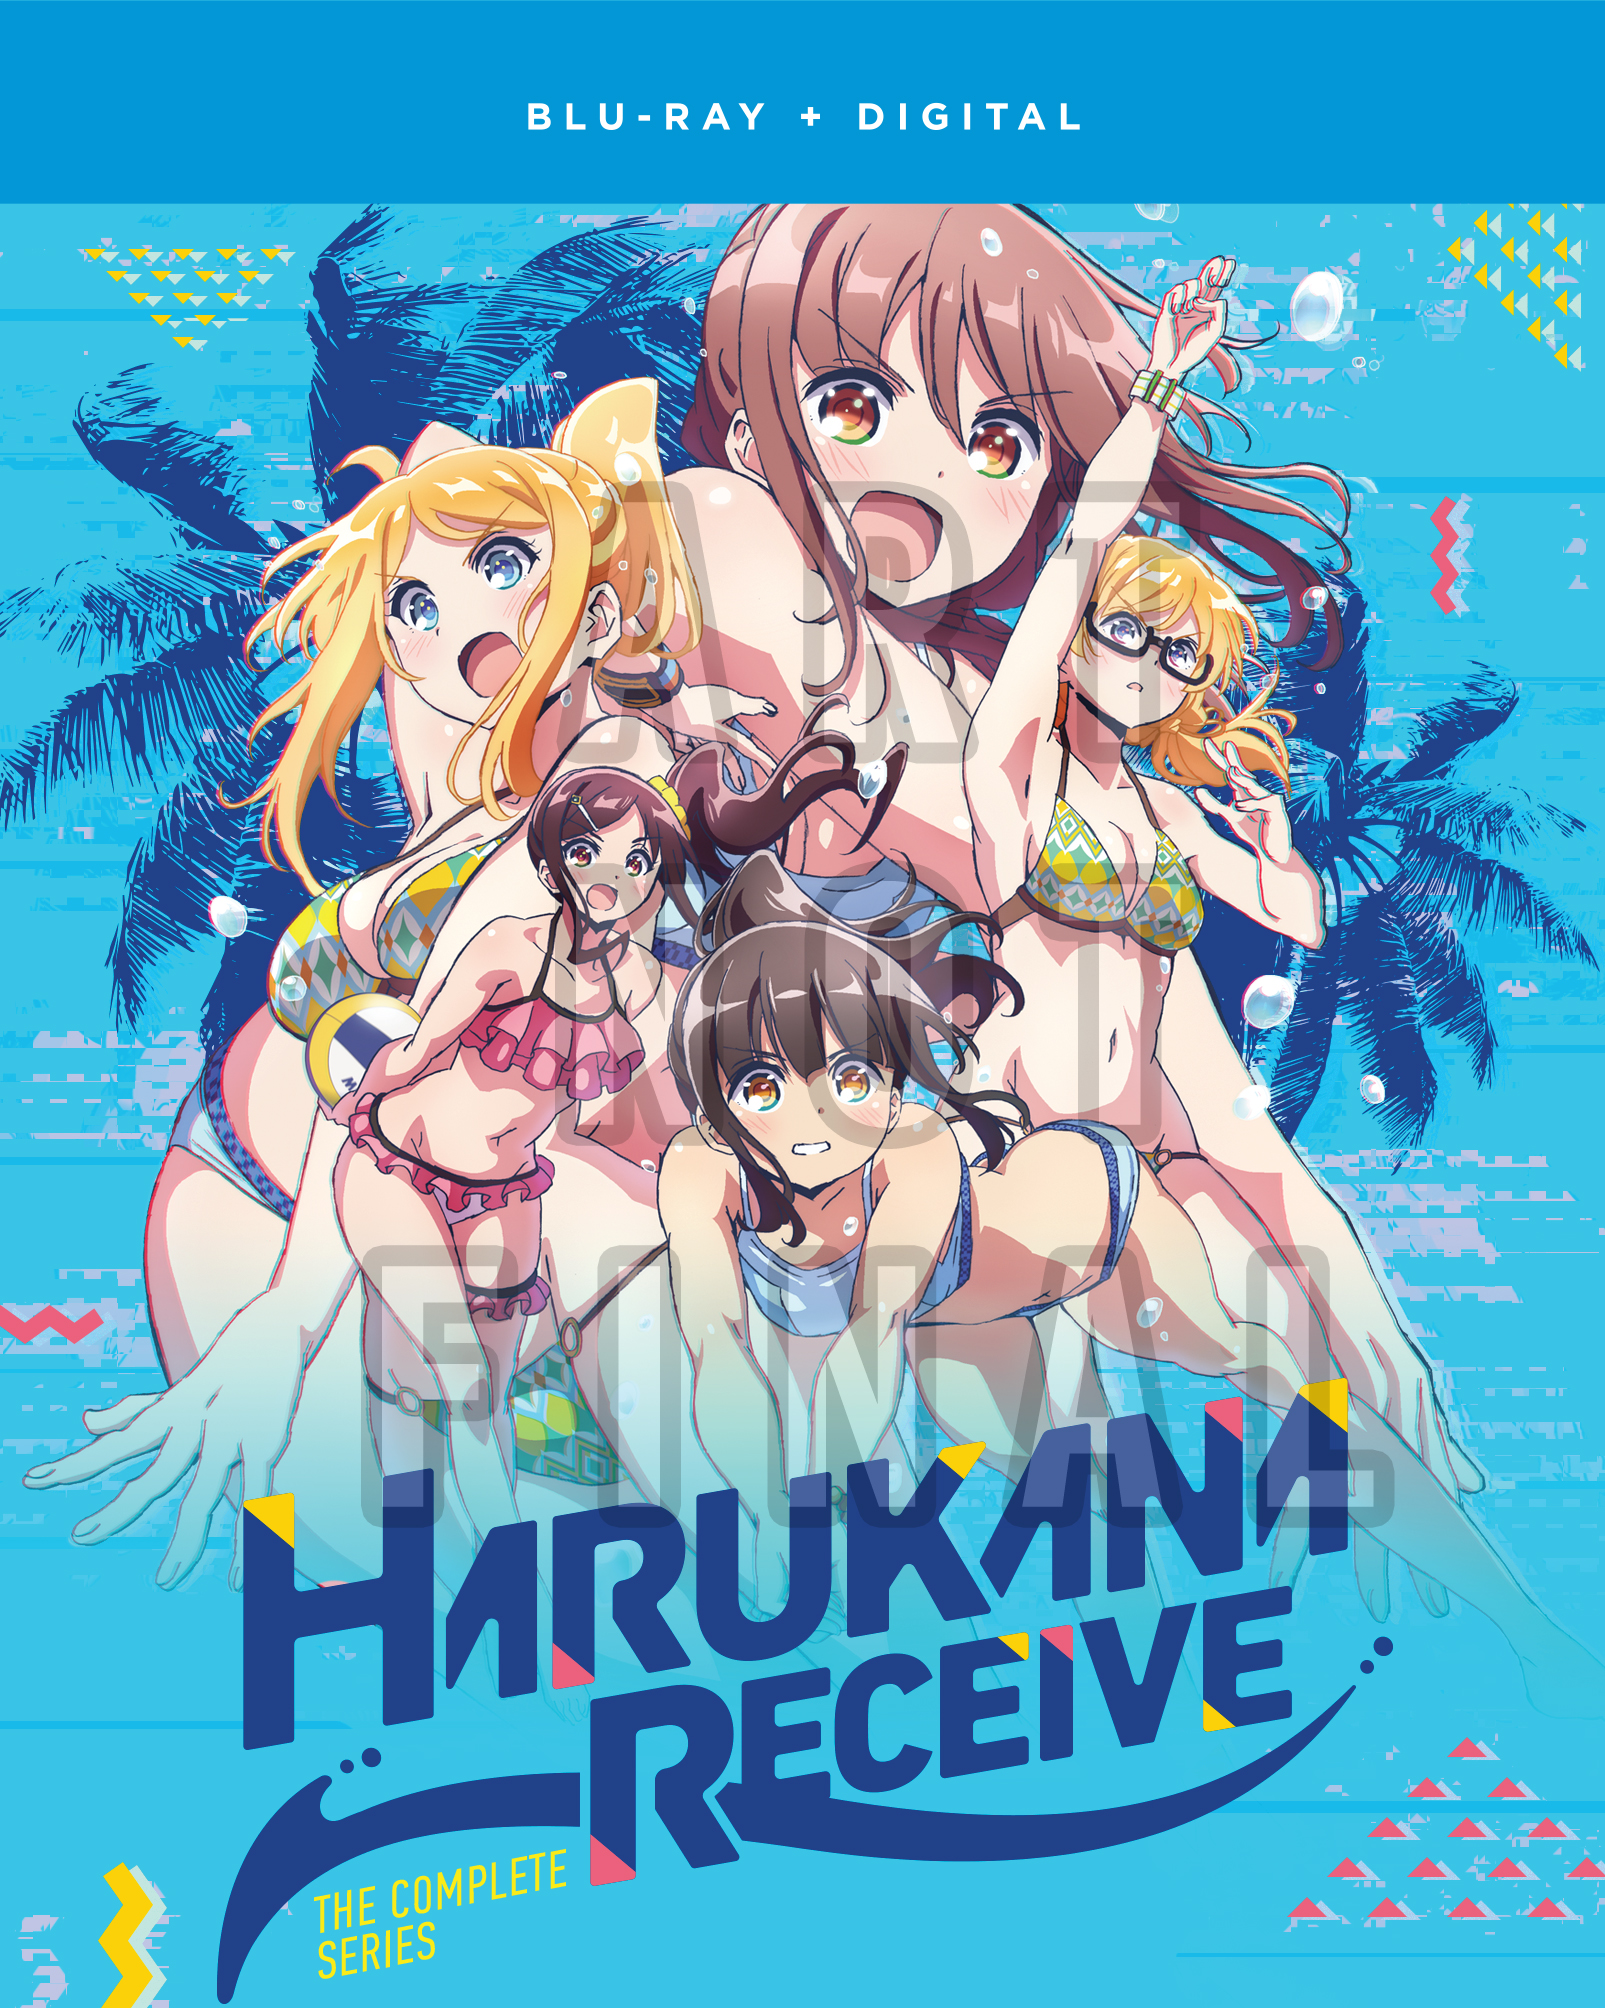 Harukana Receive Review [Best Review]